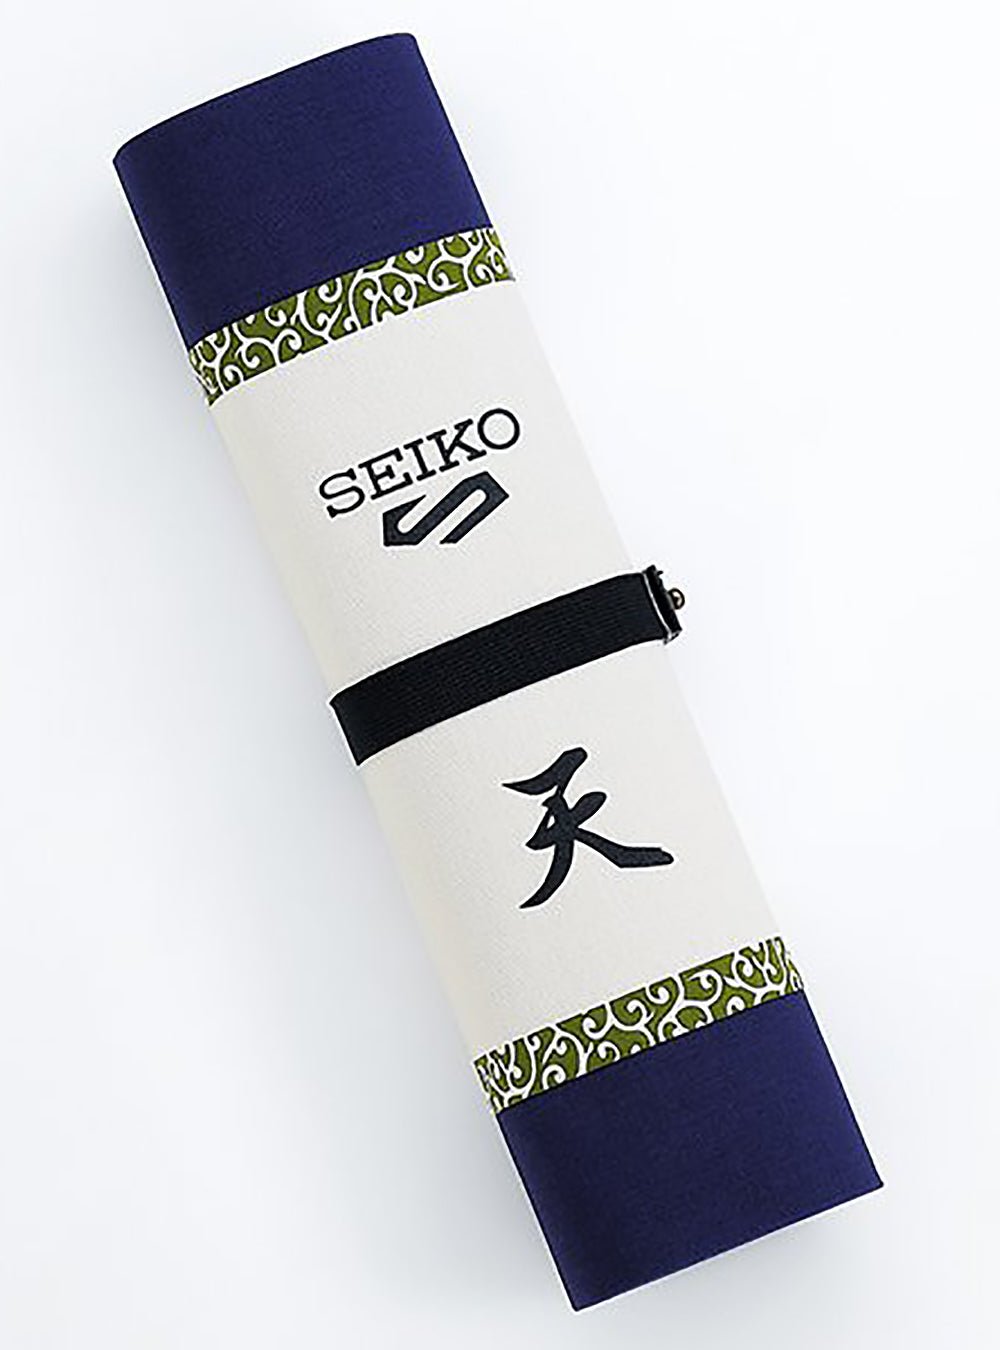 SEIKO 5 SPORTS NARUTO & BORUTO LIMITED EDITION ROCK LEE MODEL SBSA095 MADE IN JAPAN JDMWRISTWATCHjapan-select